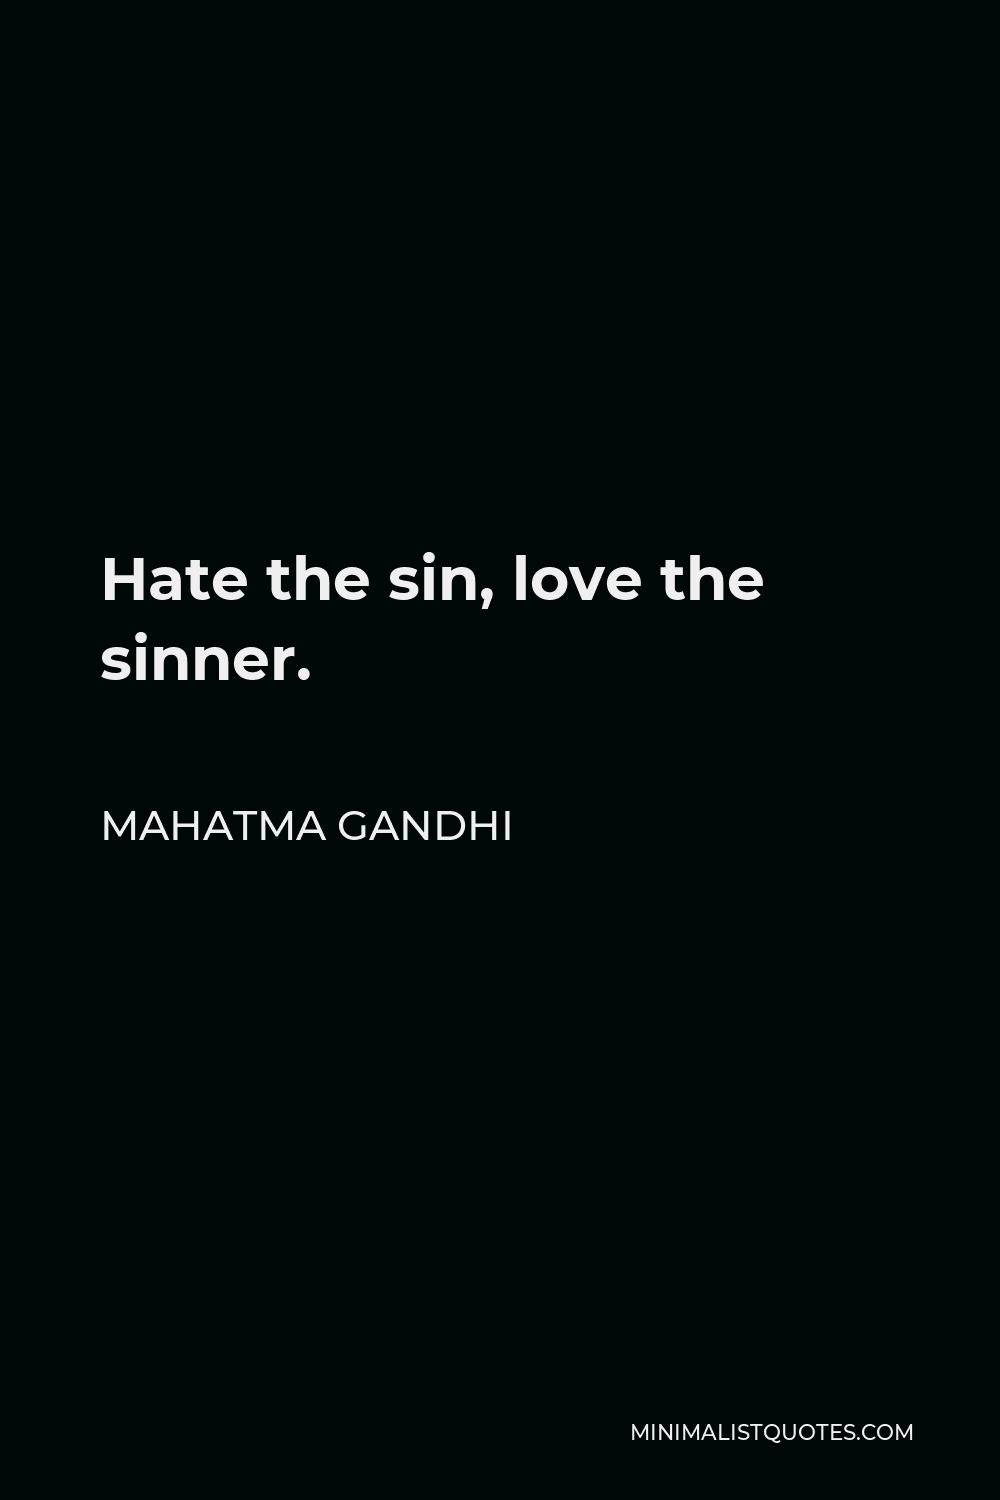 Mahatma Gandhi Quote: Hate the sin, love the sinner.